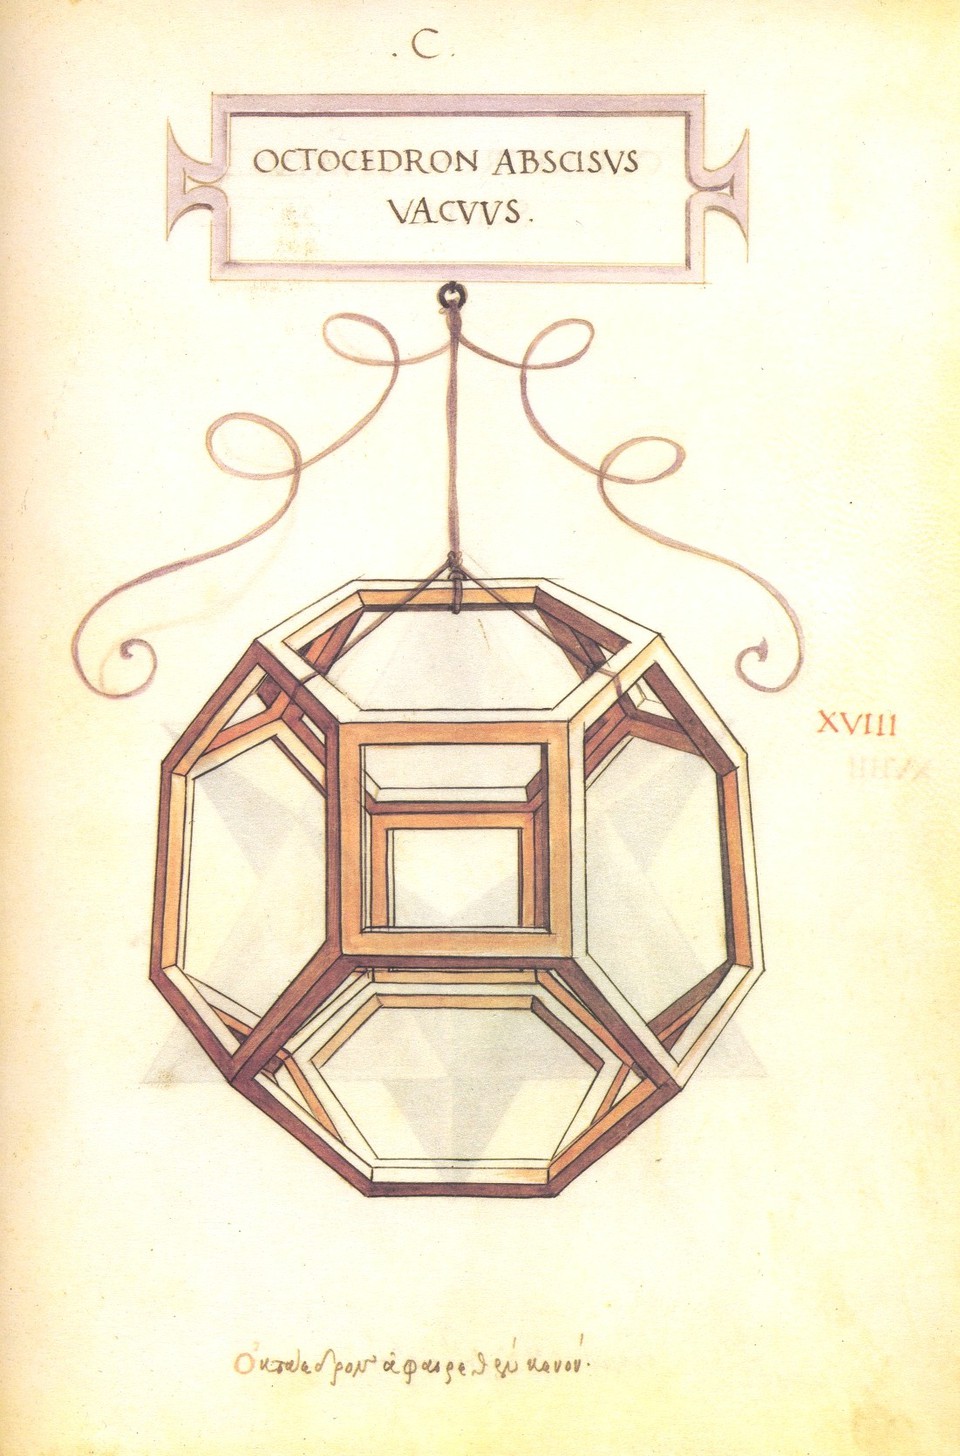 A drawing of a truncated octahedron by Leonardo da Vinci